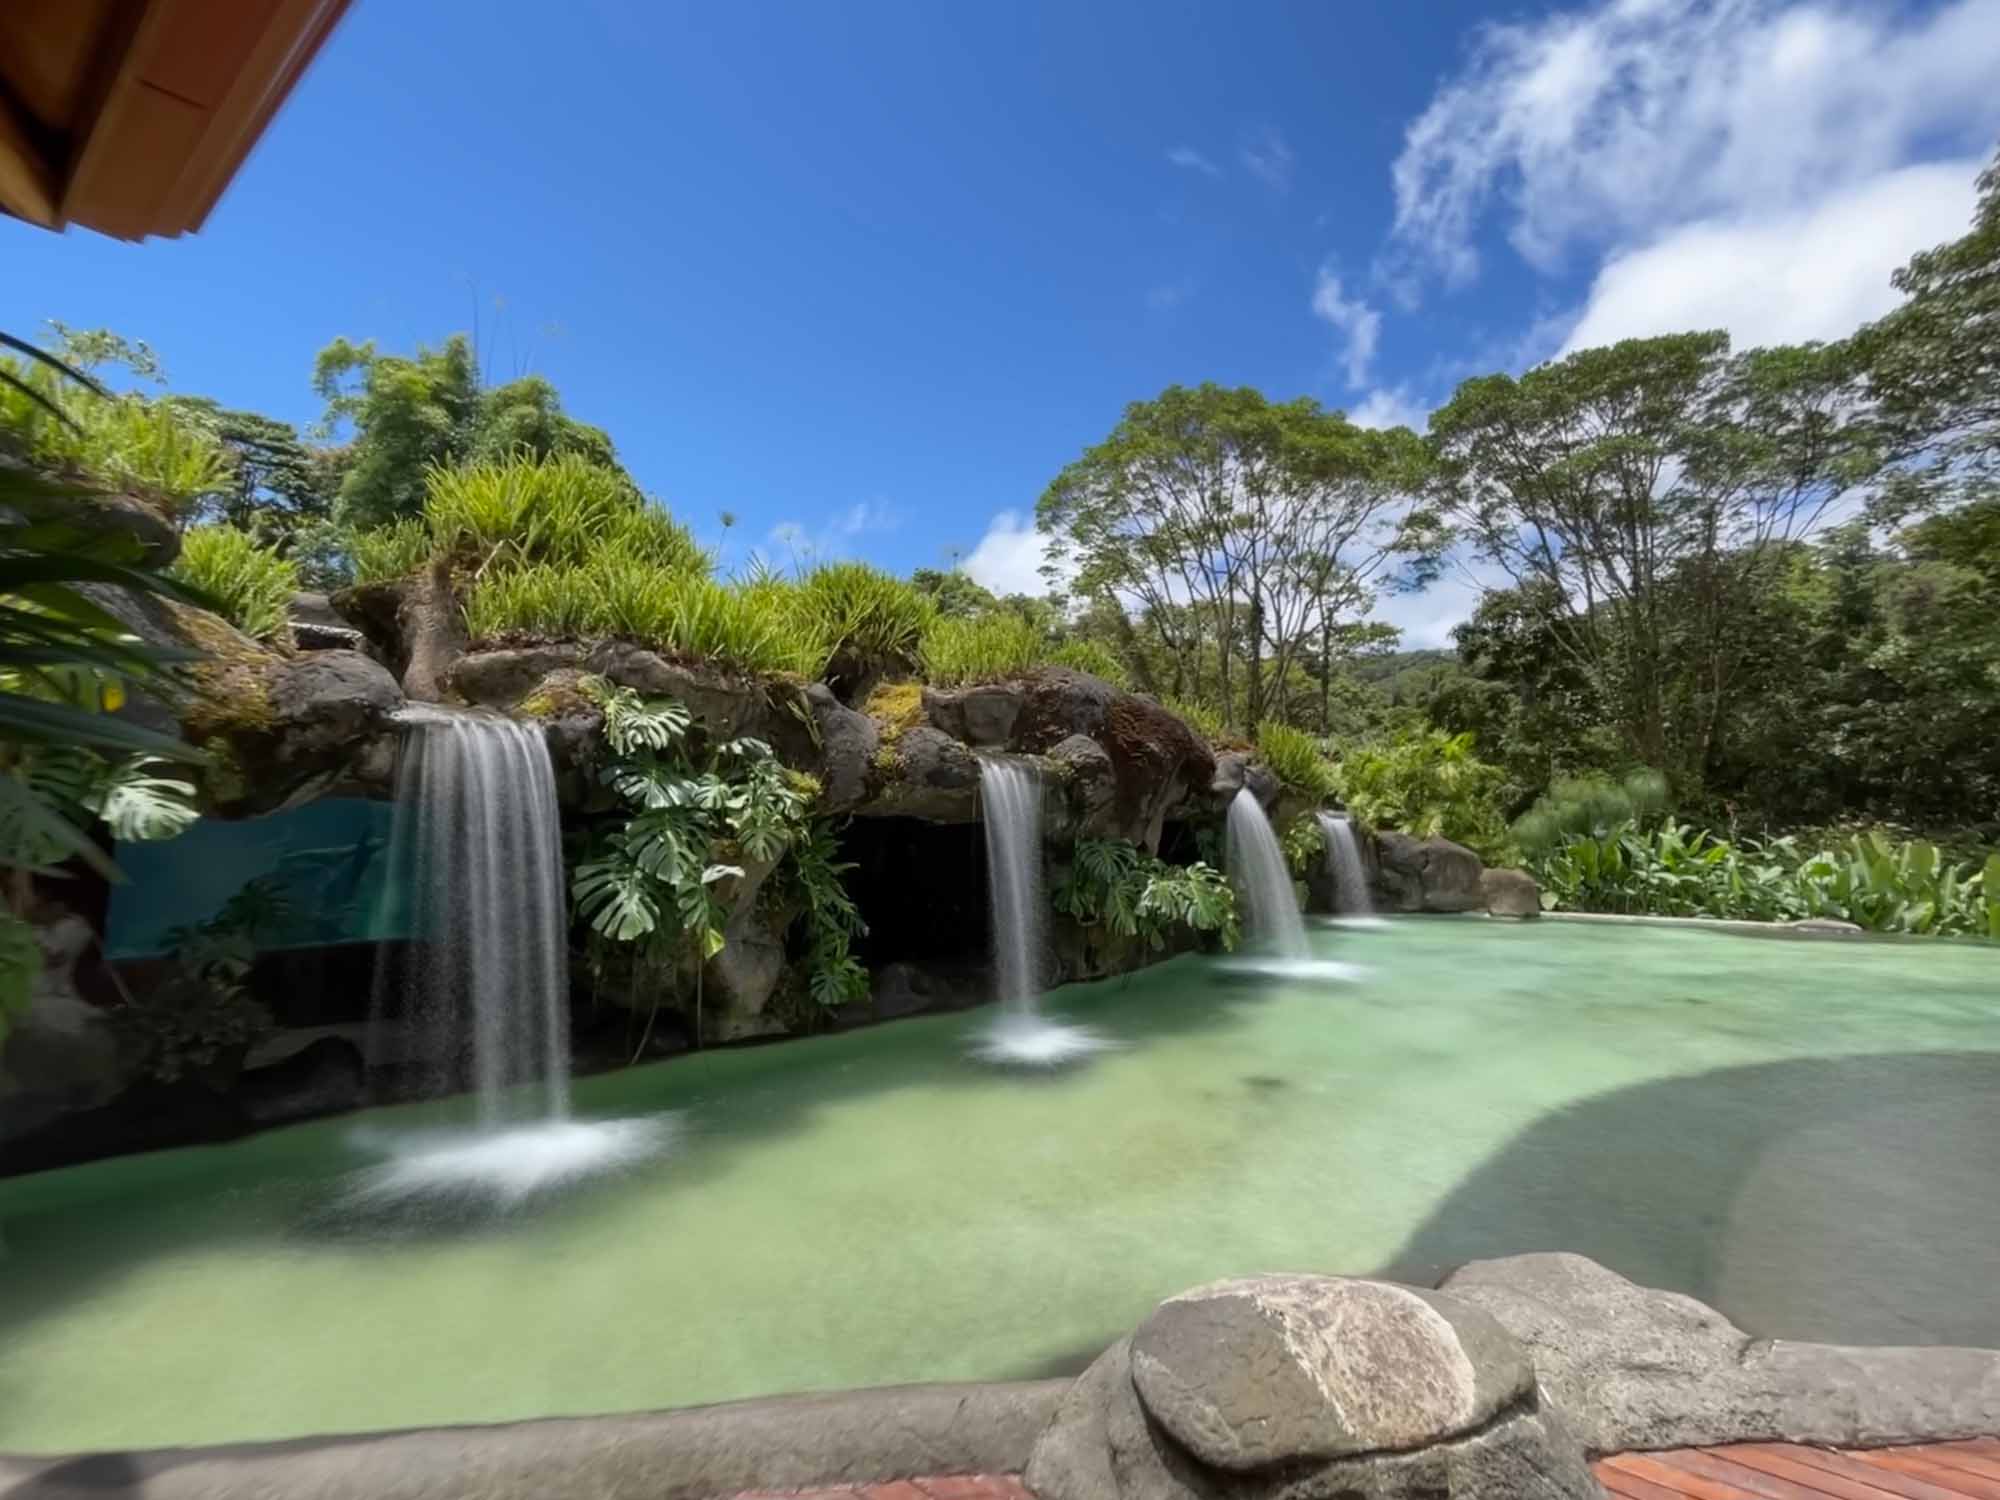 tour la paz waterfall gardens